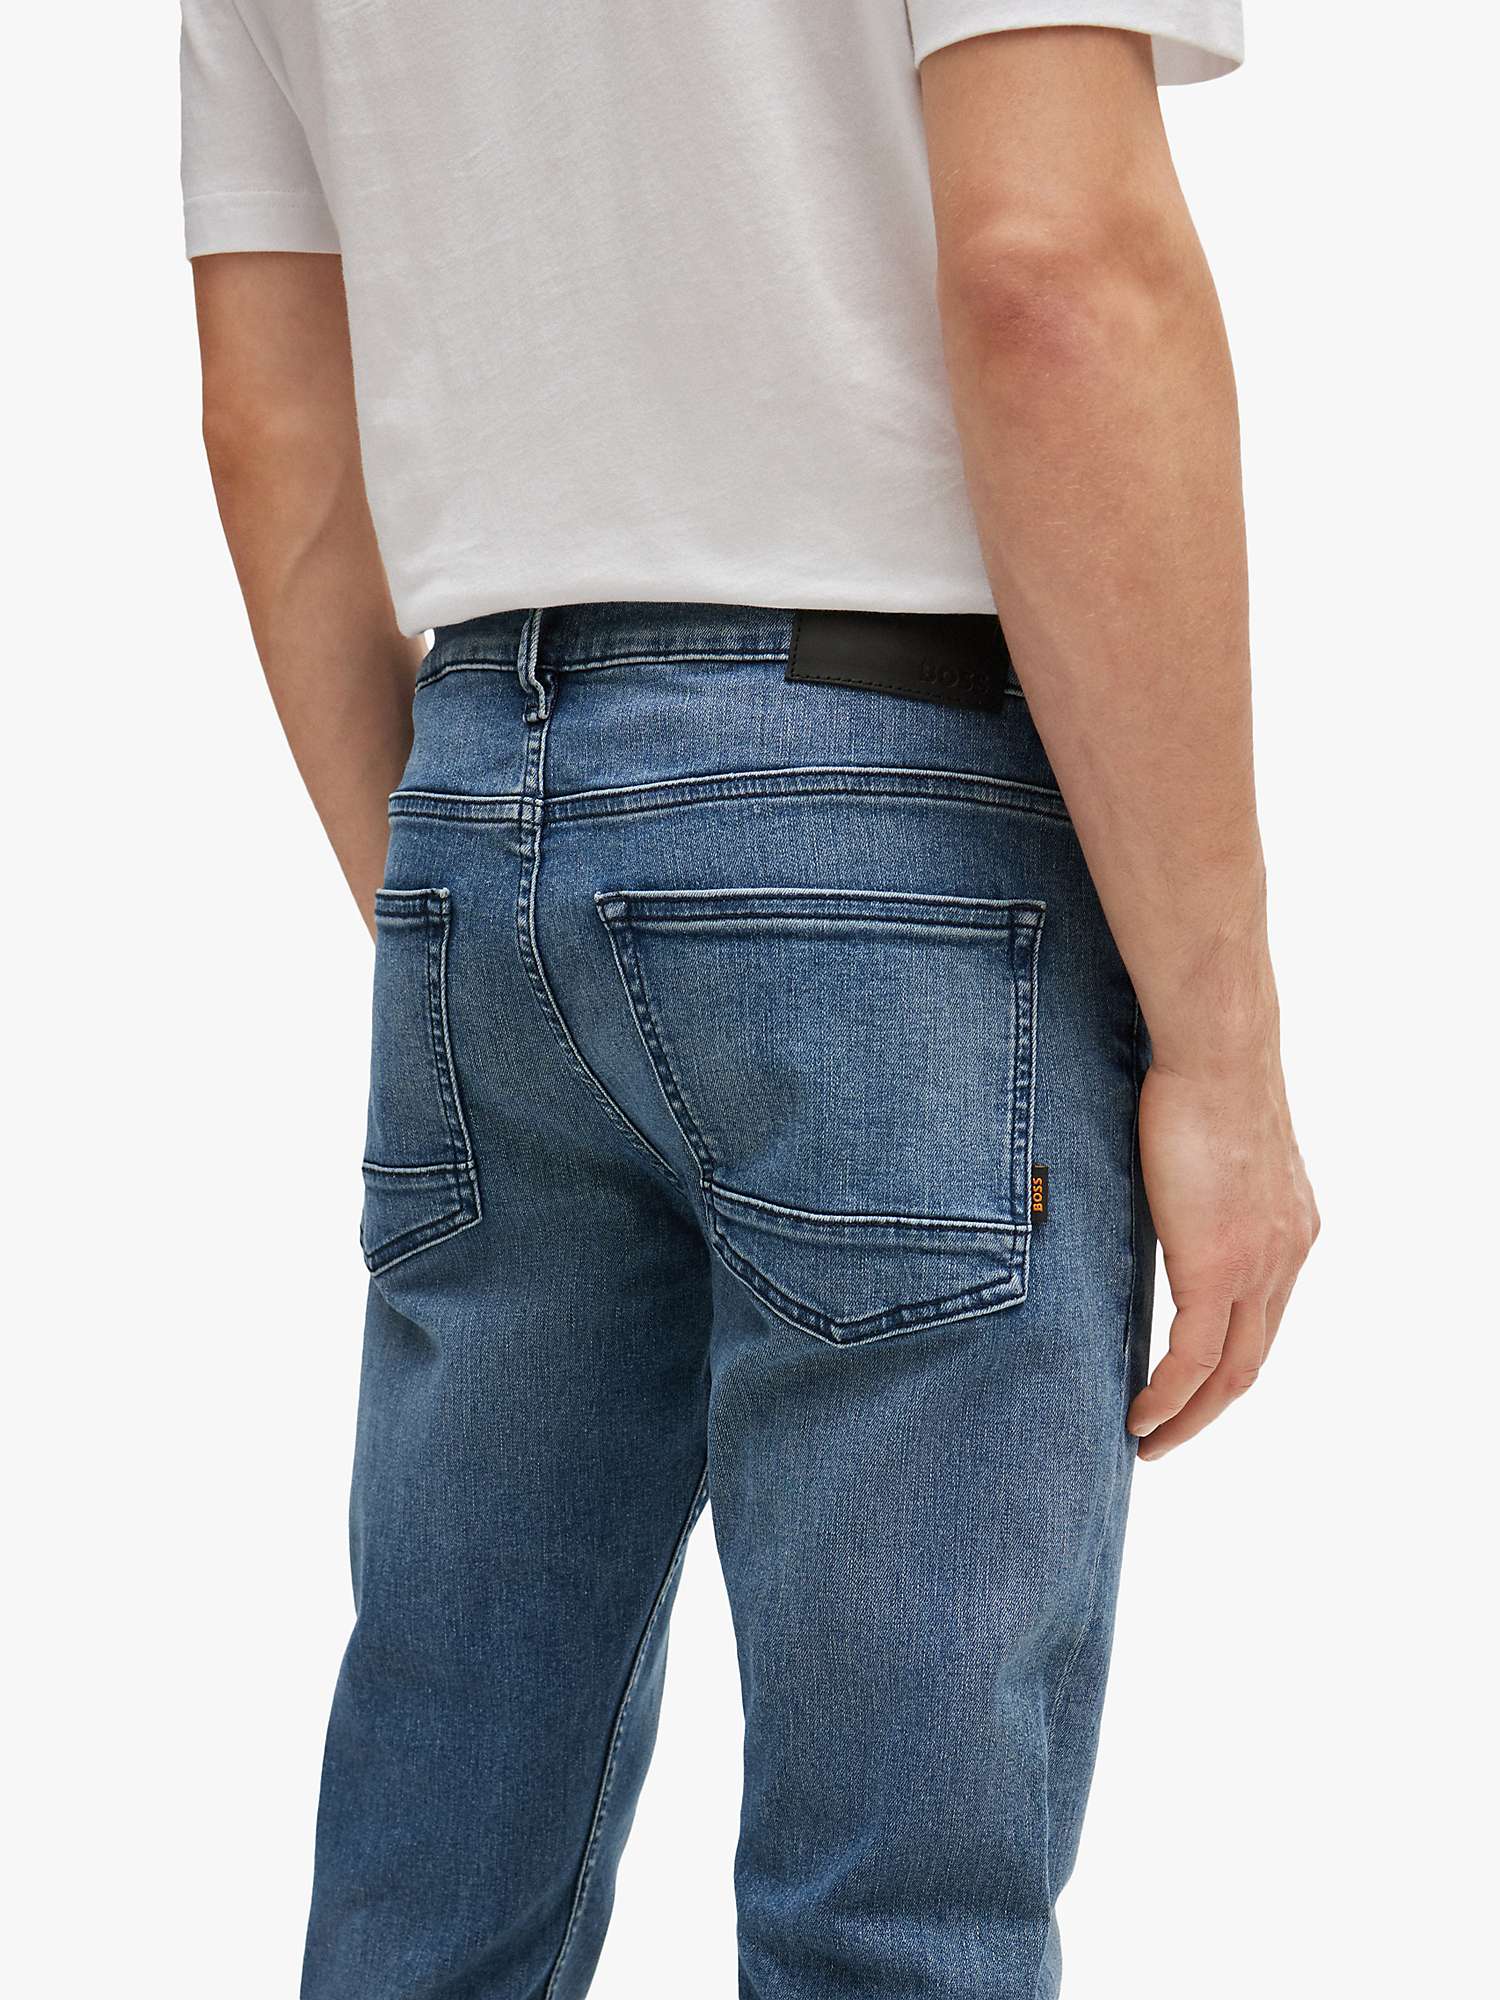 Buy BOSS Delaware Slim Fit Jeans, Blue Online at johnlewis.com